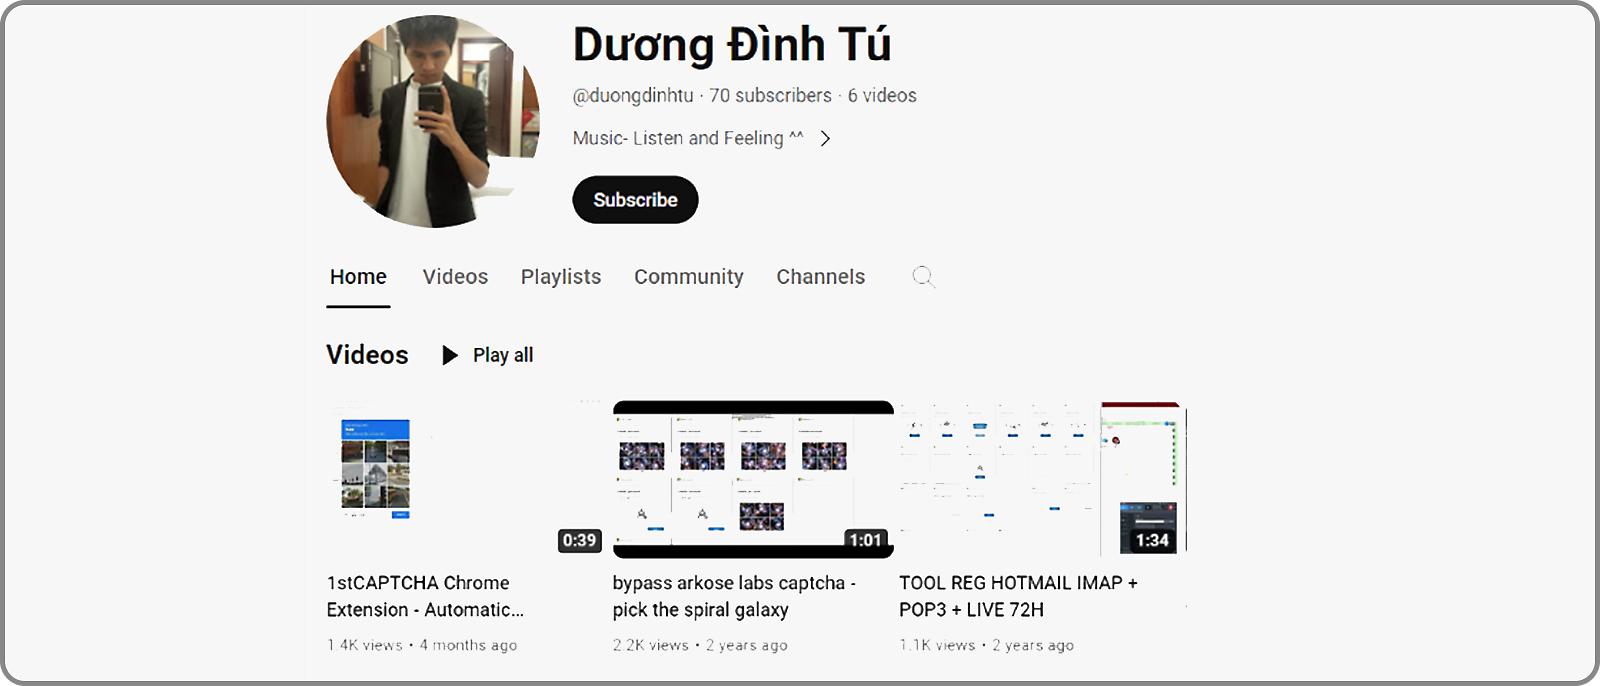 Duong Dinh Tu의 YouTube 채널